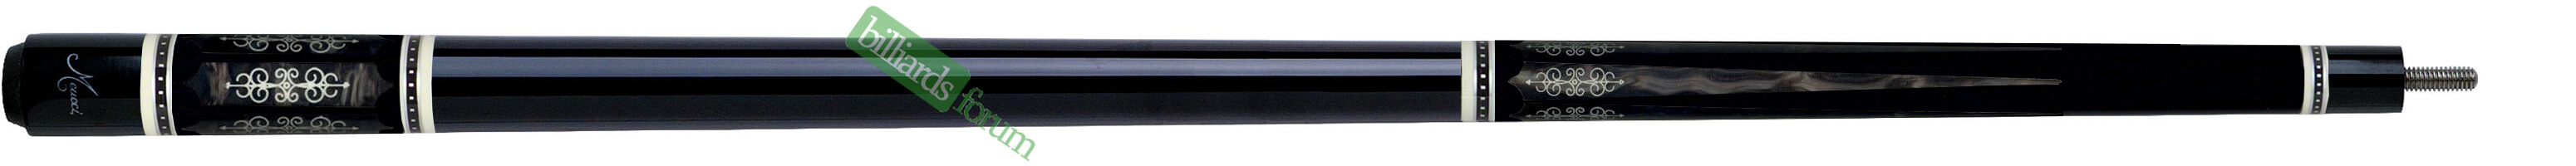 Black Meucci 21st Century Series #3 Cue with Smoke Paua Shell Inlay, Model 21-3-C-Grey